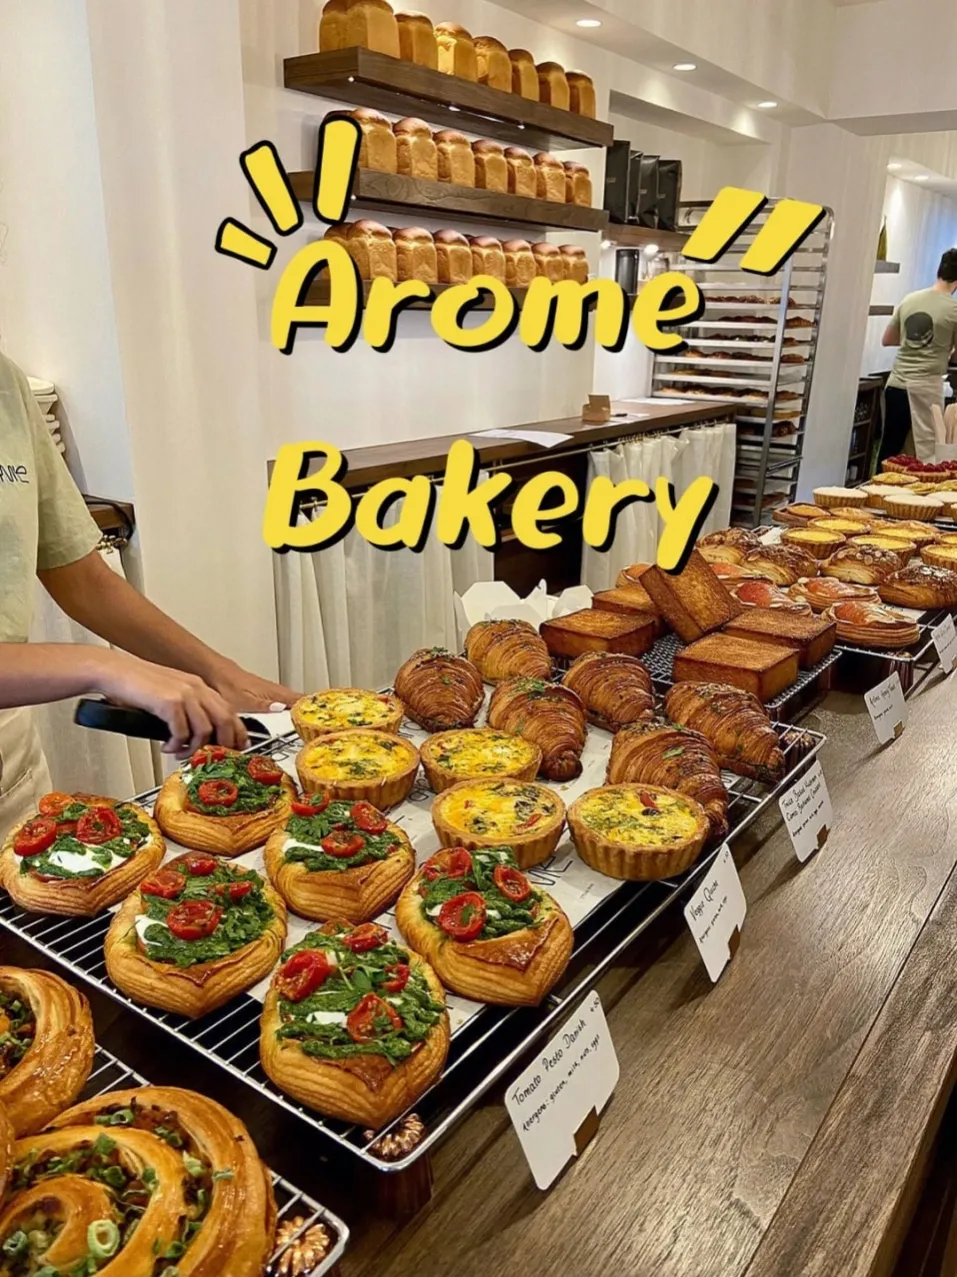 Arome Bakery - Wikipedia